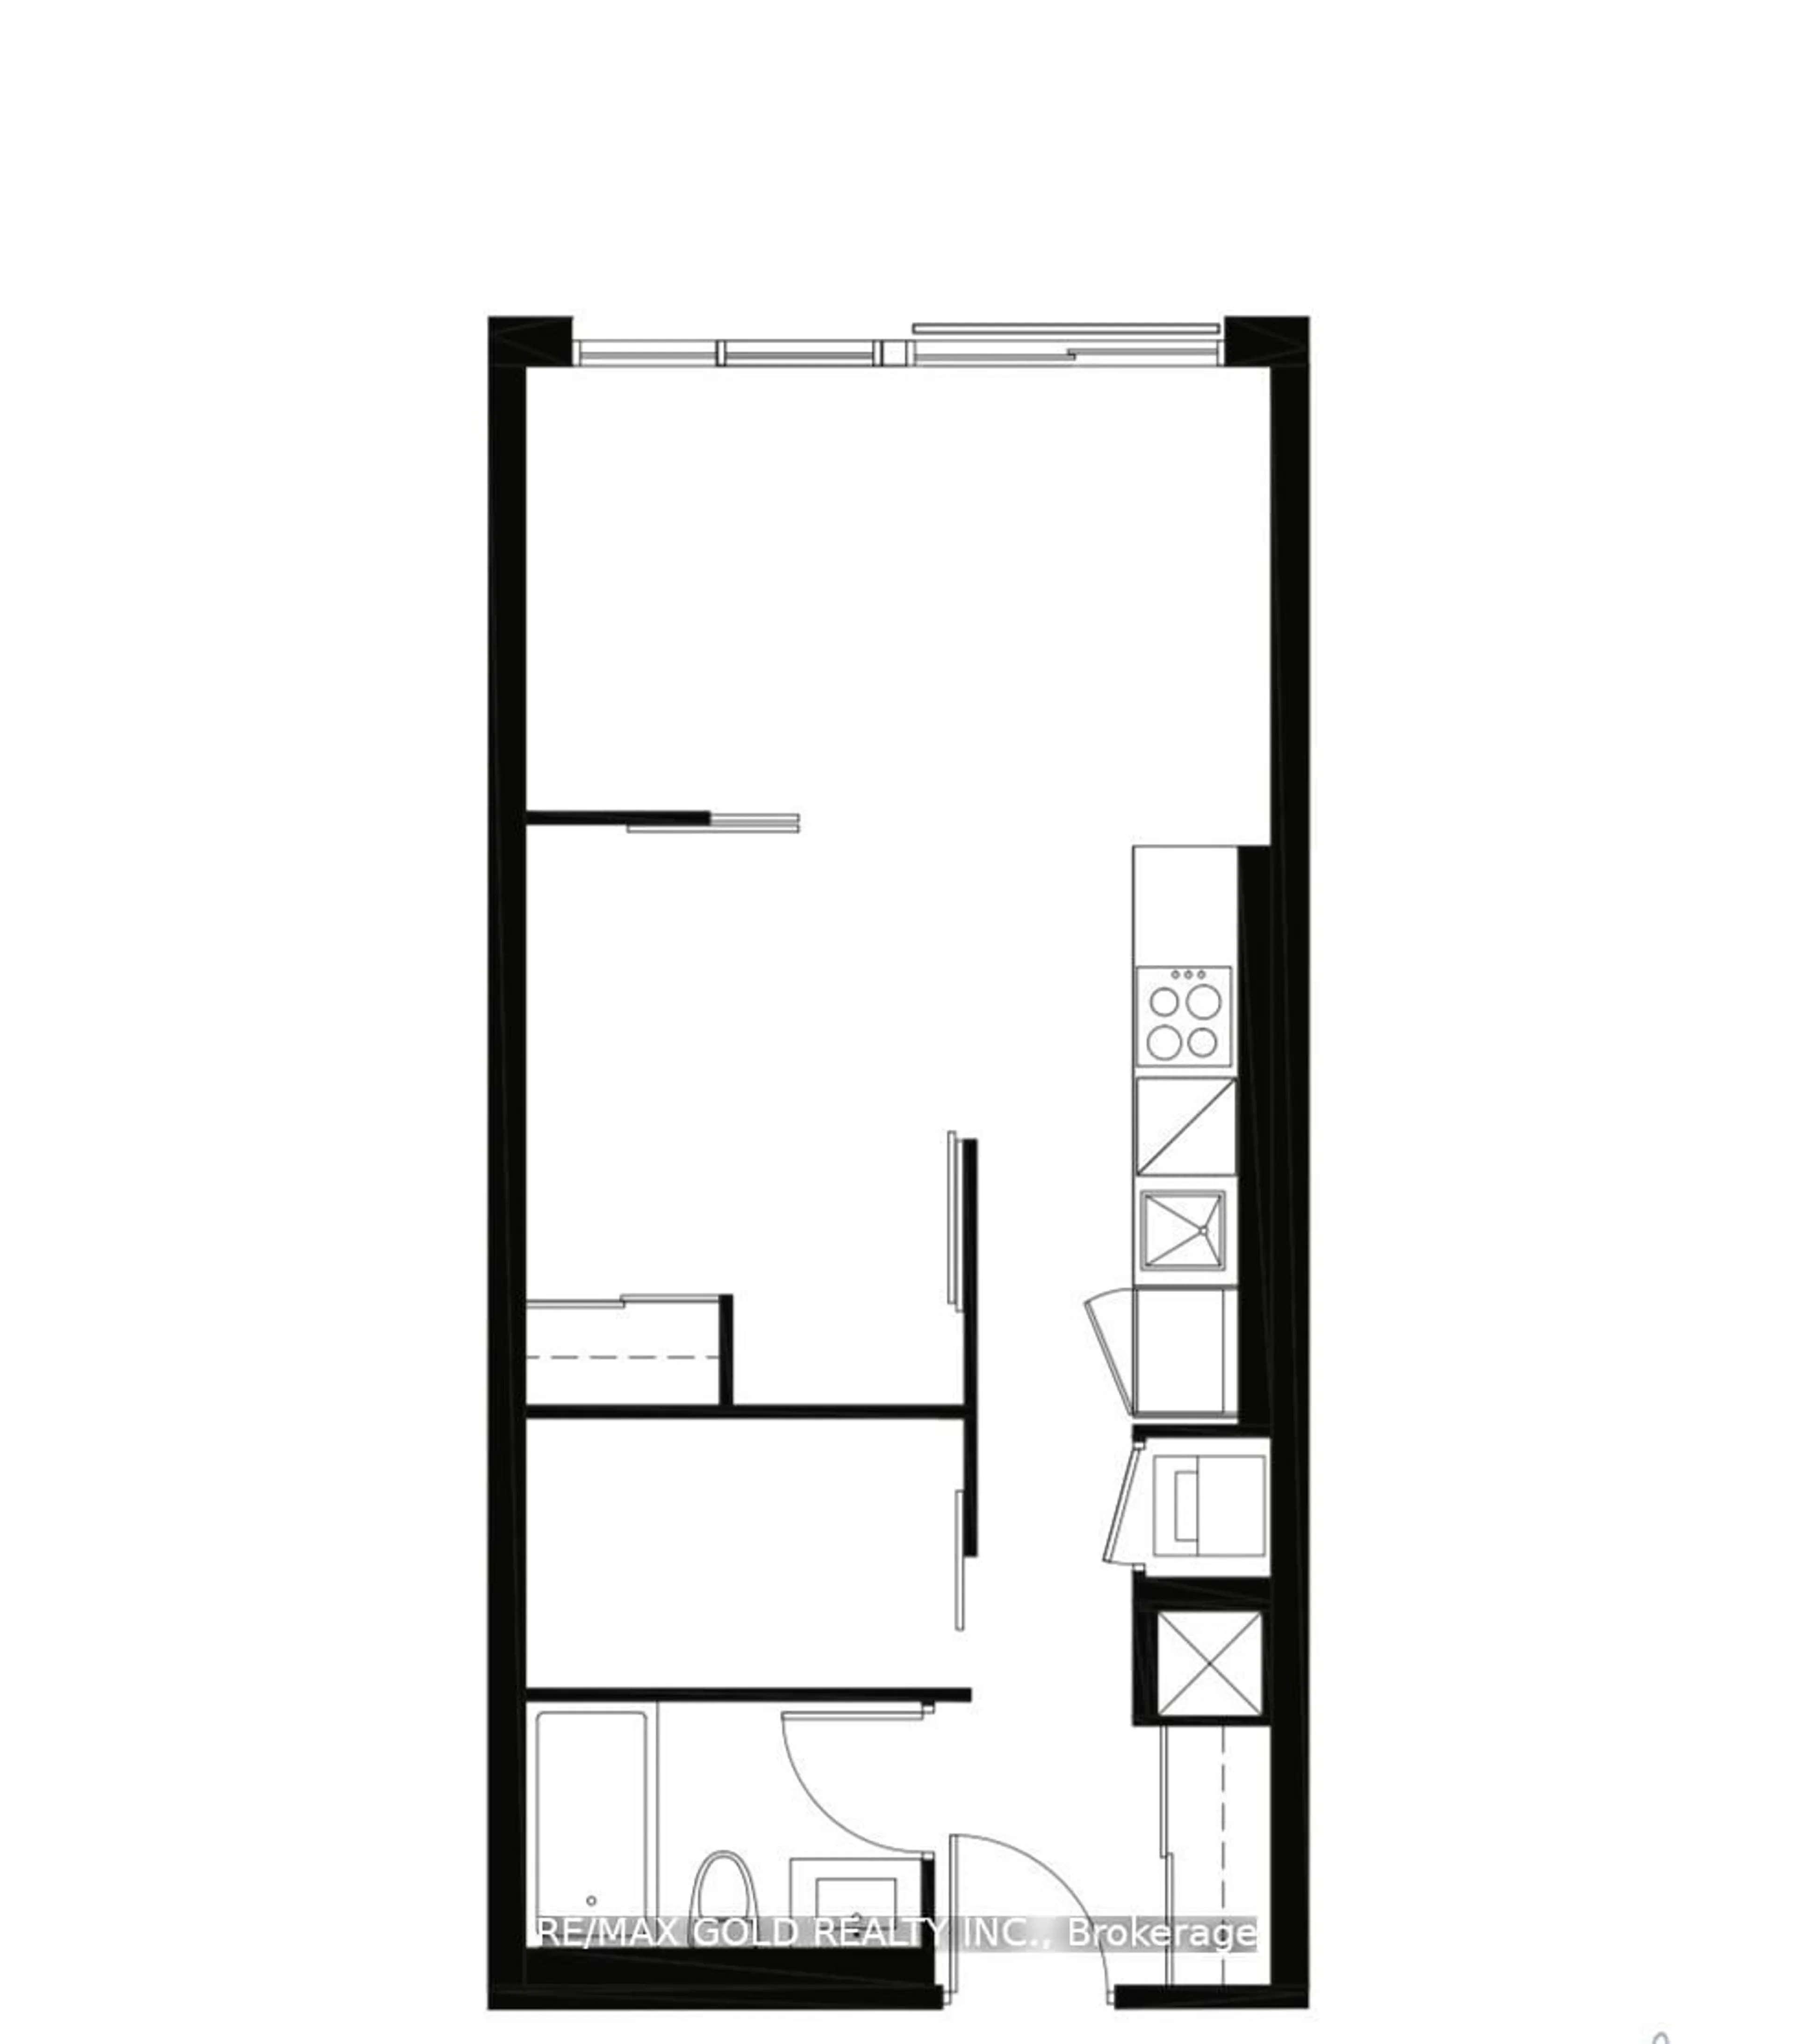 Floor plan for 2020 Bathurst St #216, Toronto Ontario M5P 3L1